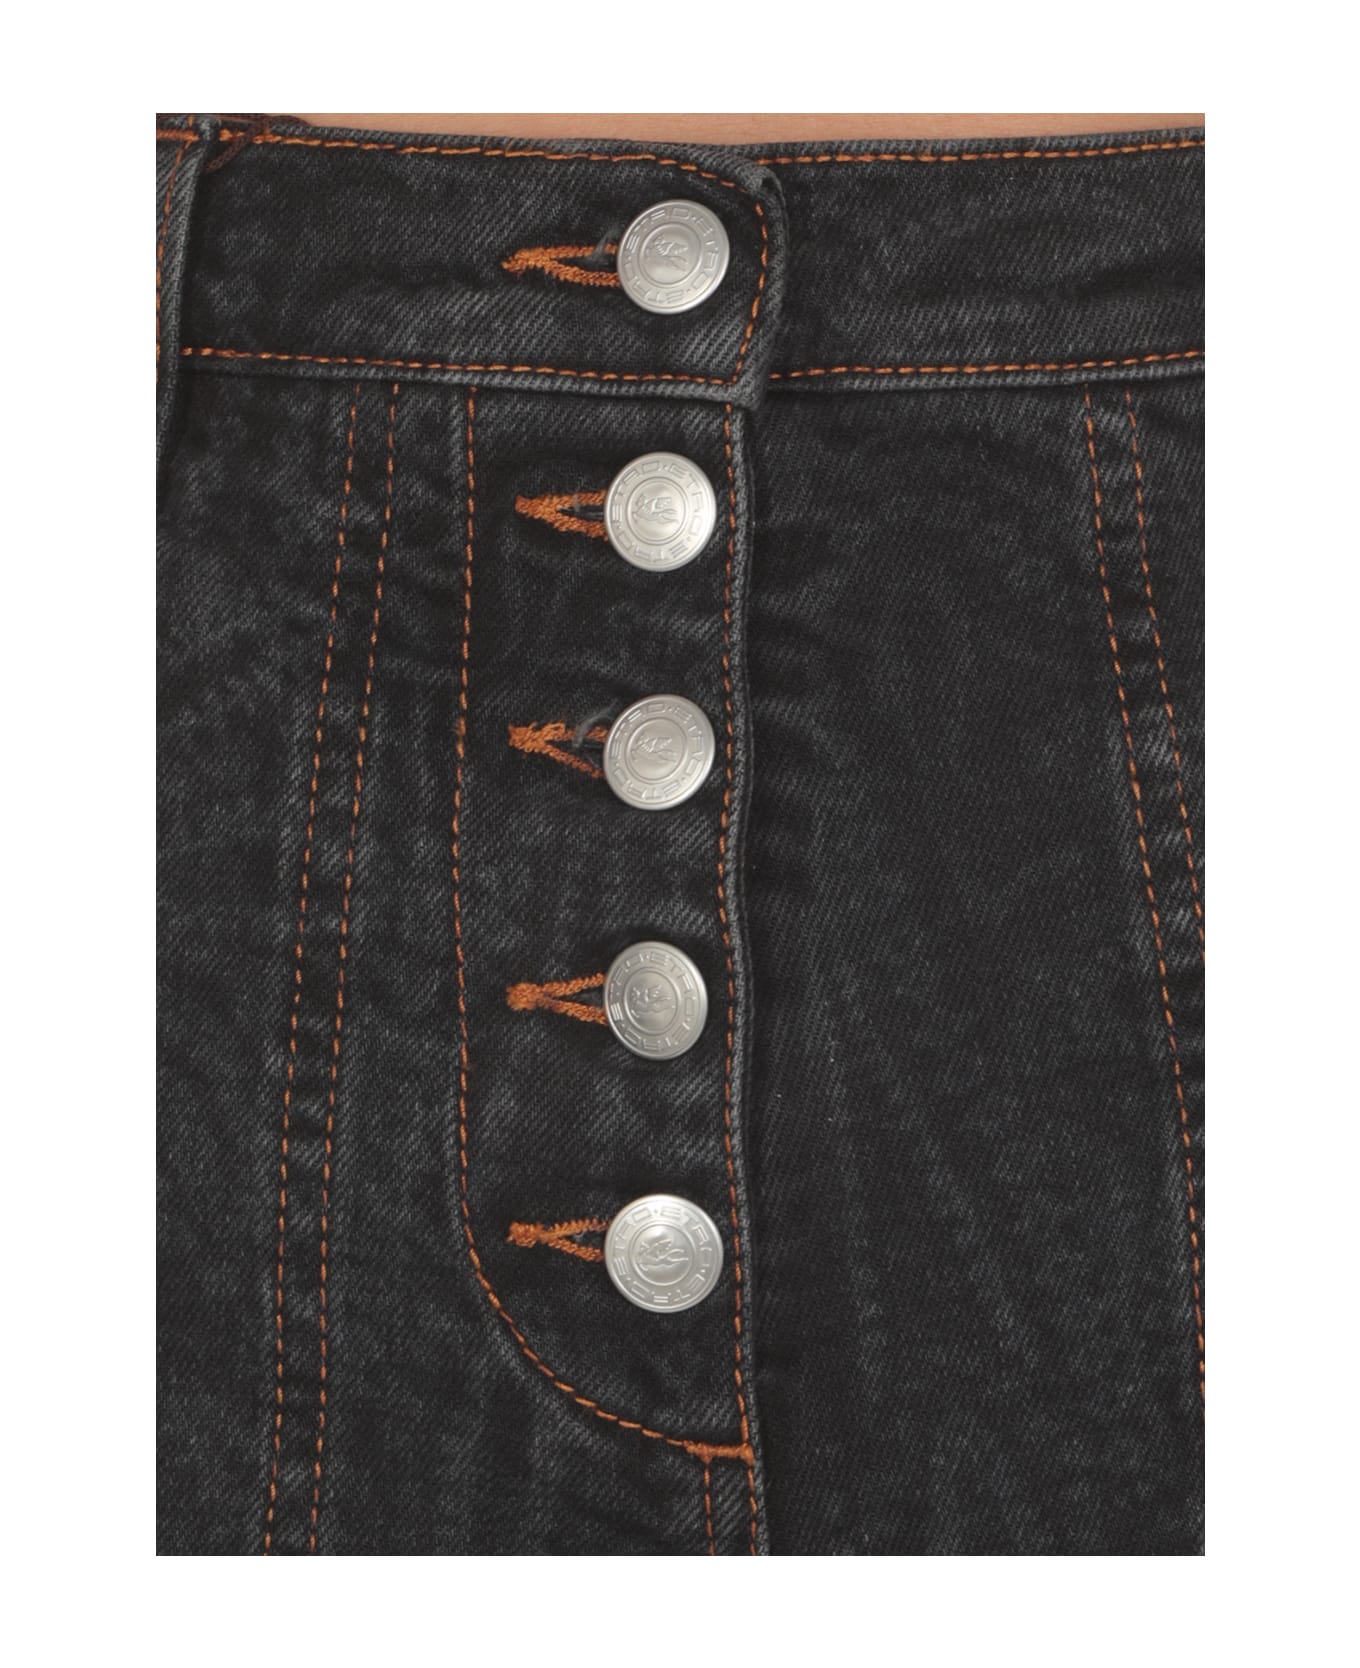 Etro Jeans With Foliage Pockets - Black